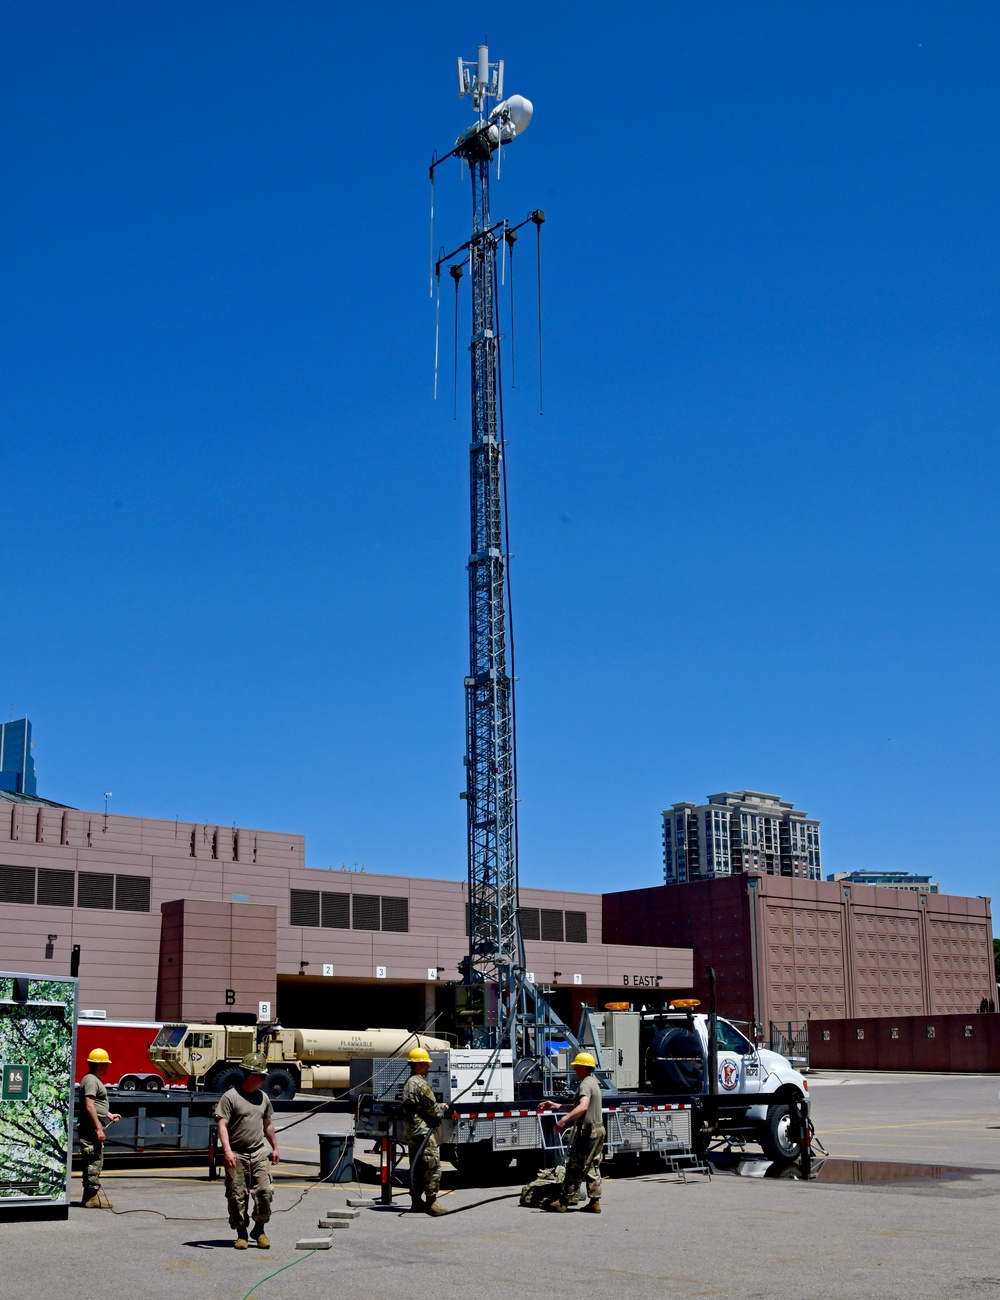 Tower Raised on Communications Platform